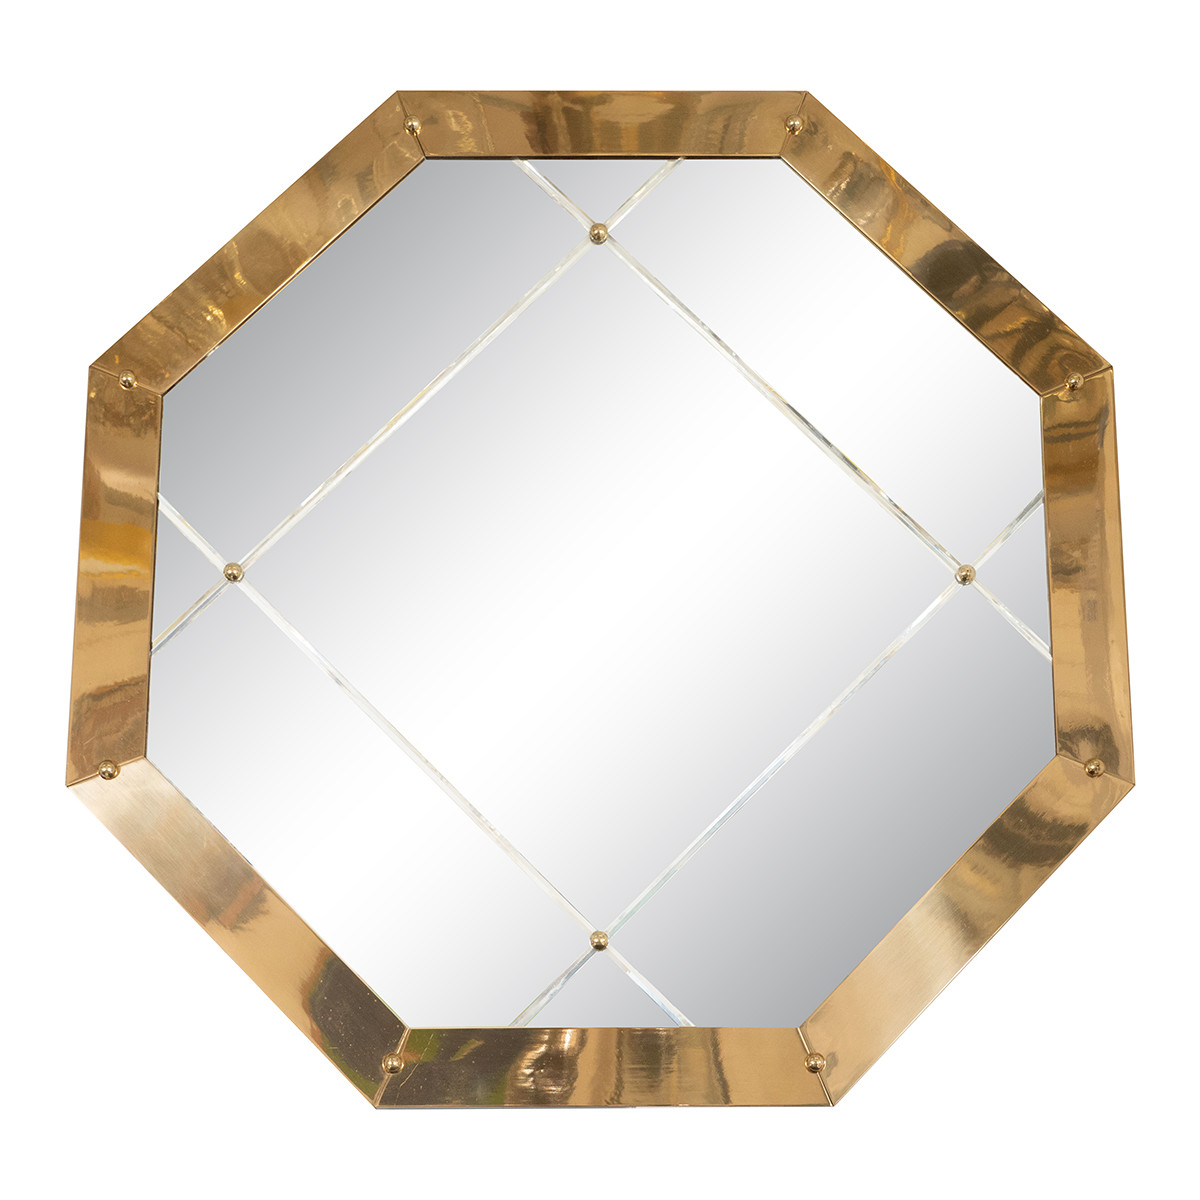 Octagonal brass mirror